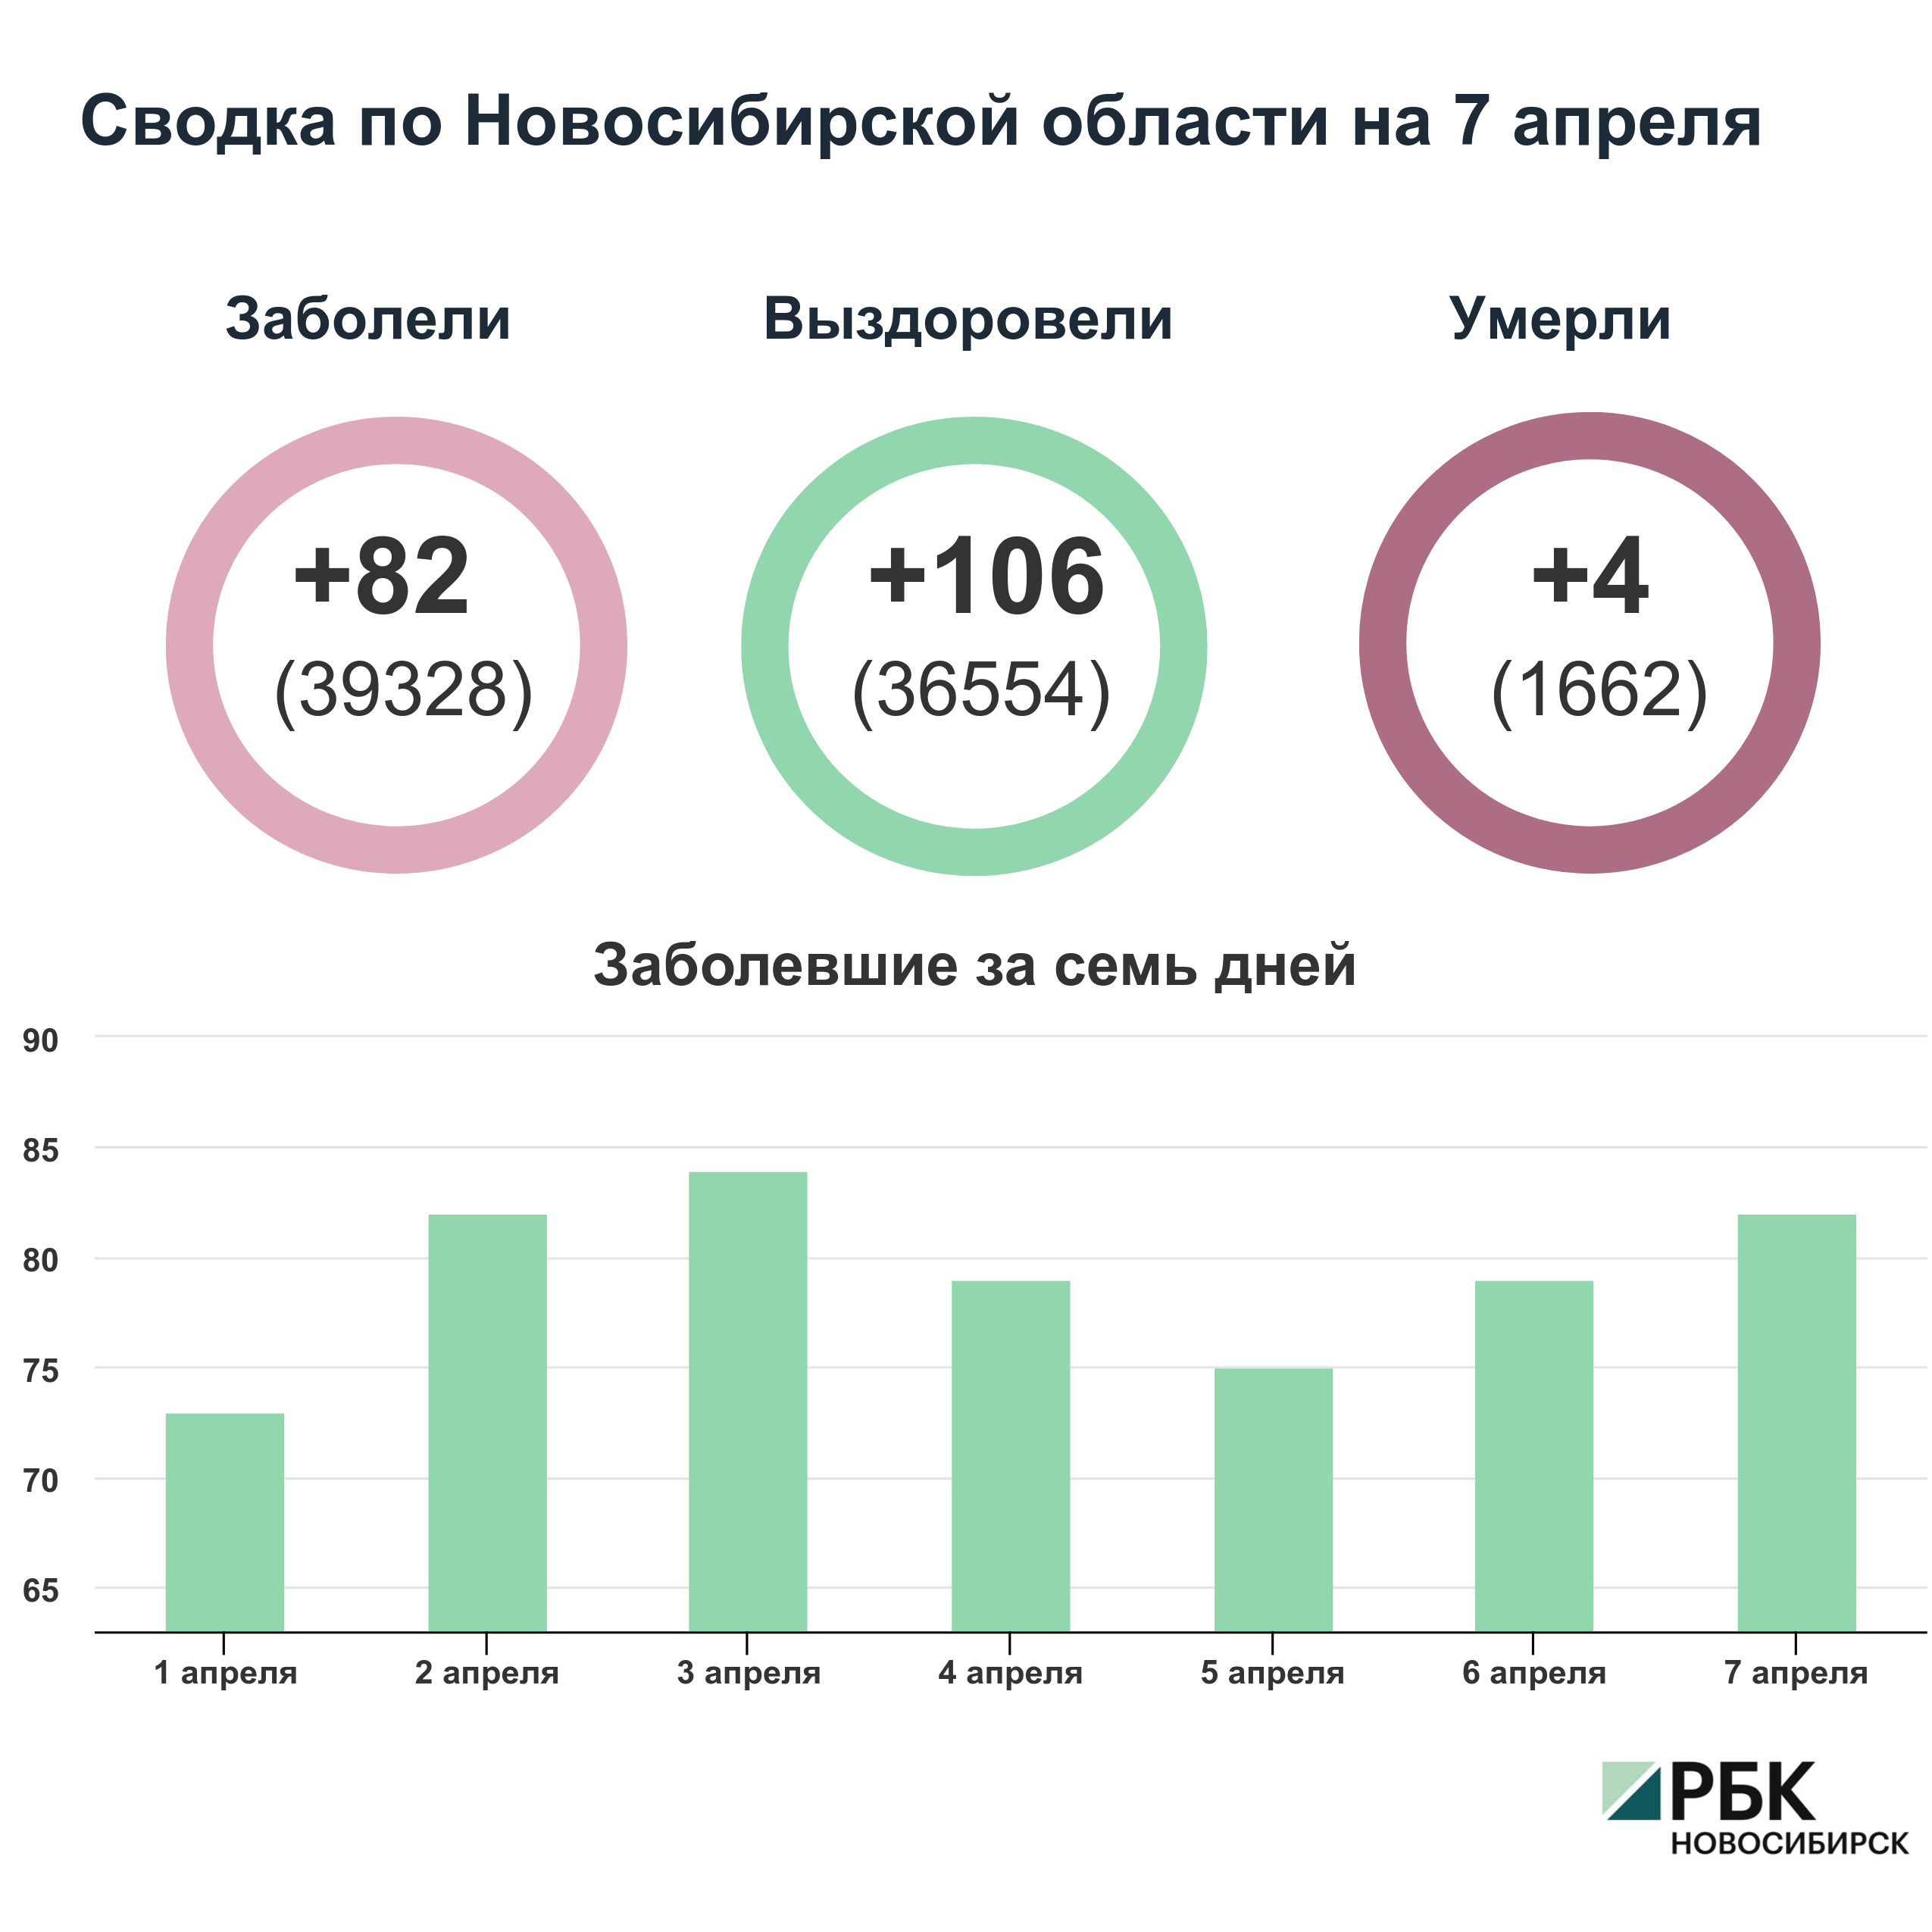 Коронавирус в Новосибирске: сводка на 7 апреля